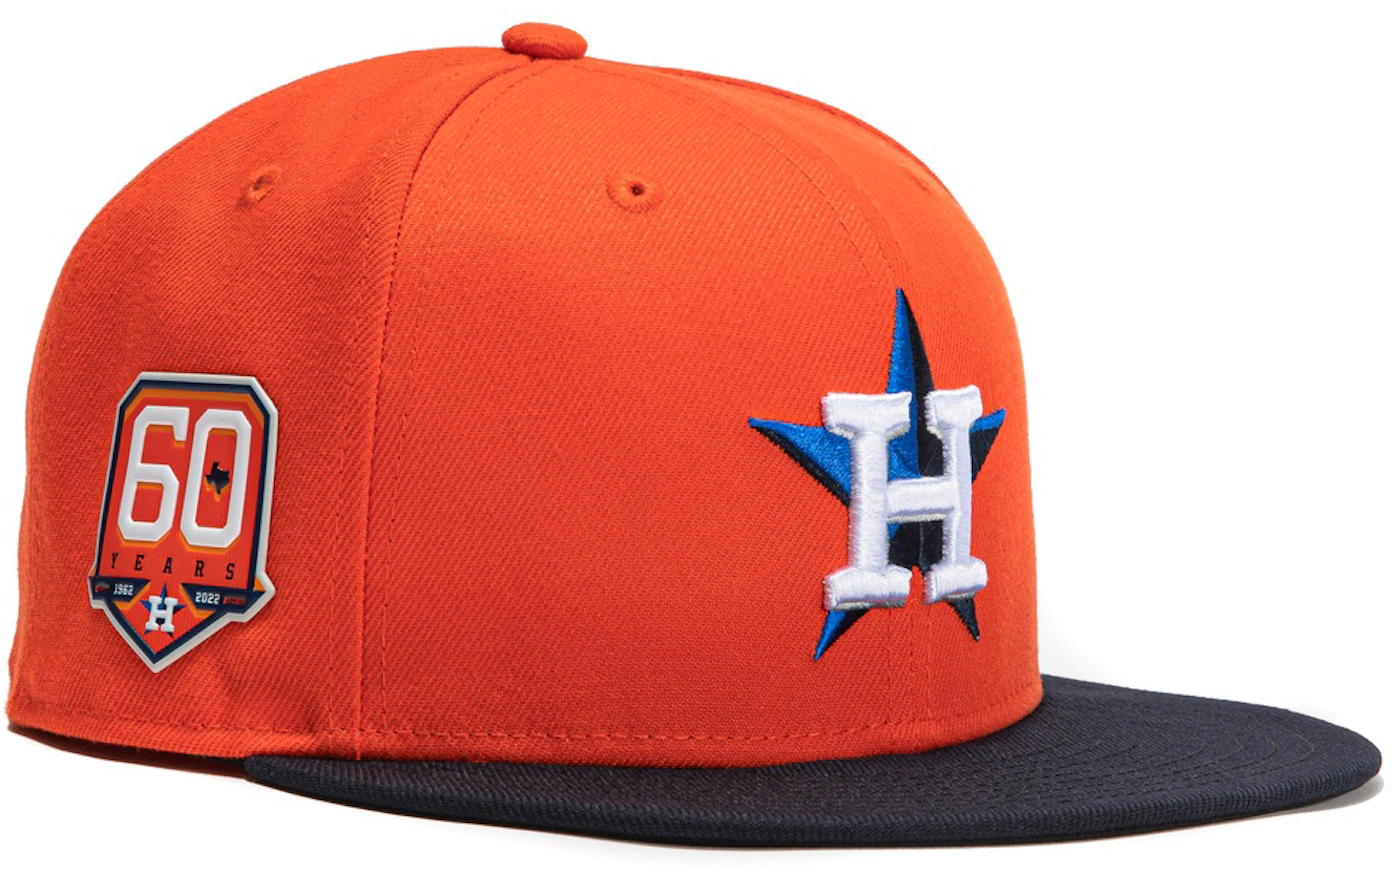 New Era Houston Astros 60th Anniversary Patch Alternate Hat Club